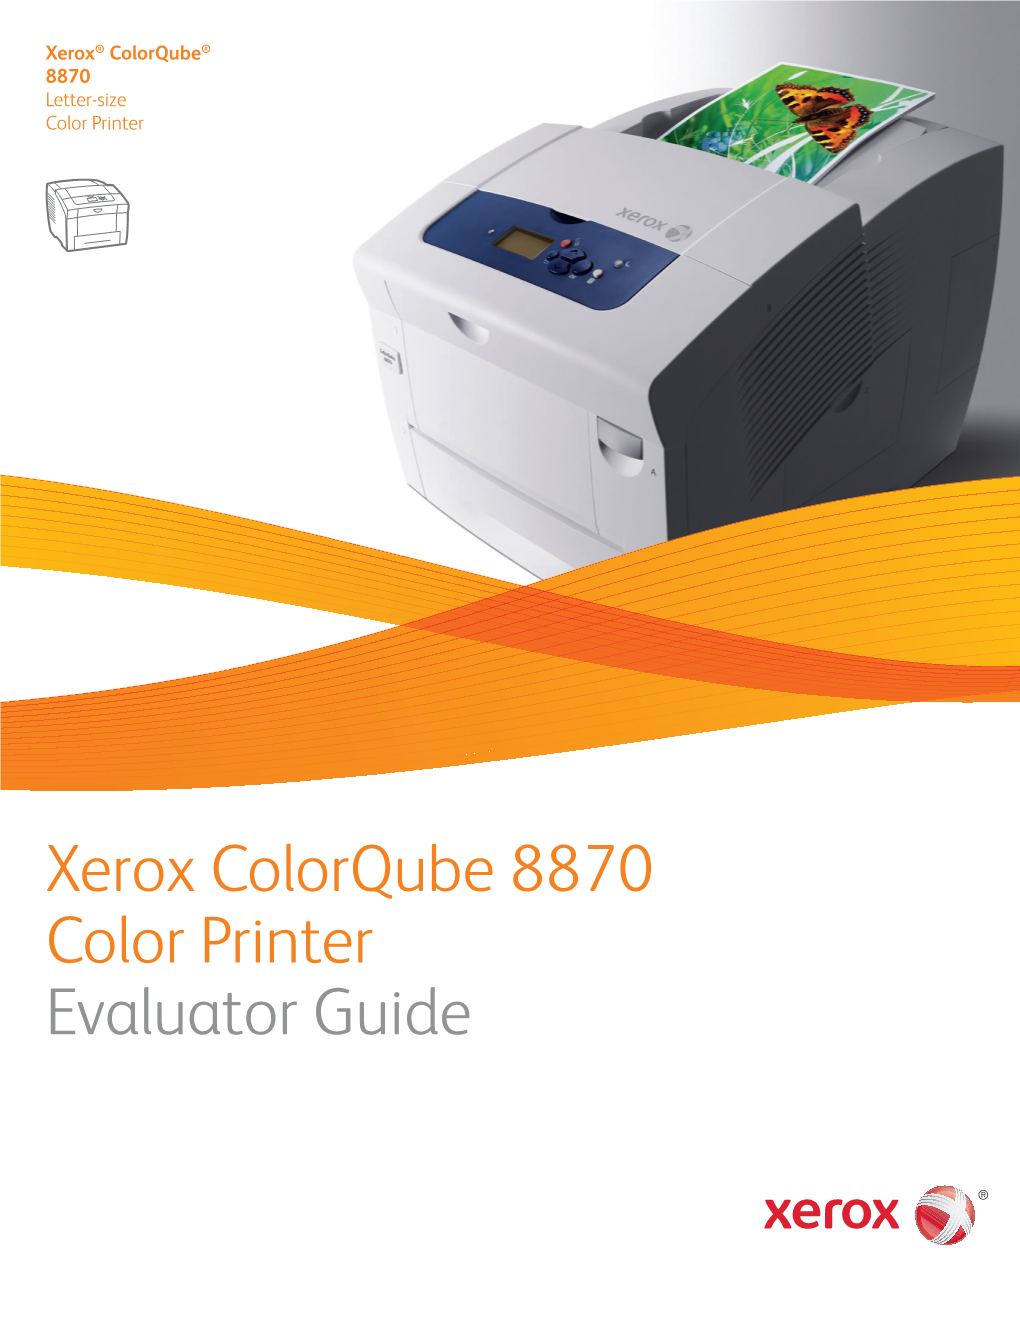 Colorqube 8870 Solid Ink Color Printer Evaluator Guide